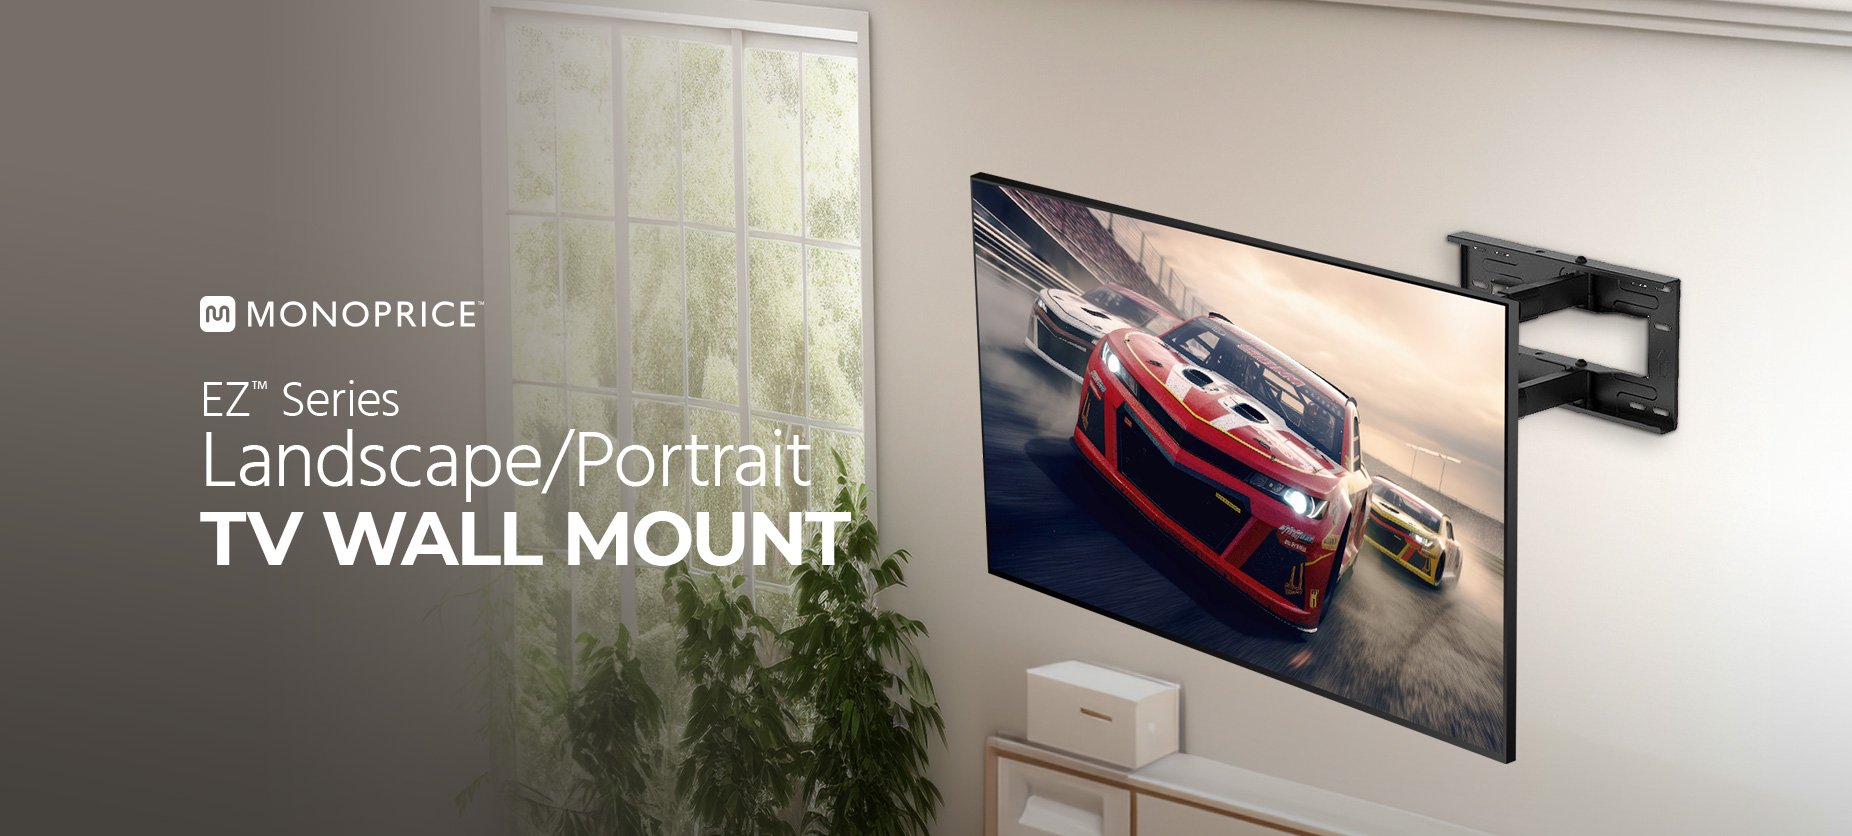 Full Motion Articulating Tv Wall Mount, Rotating Portrait Landscape Tv Wall Mount Bracket